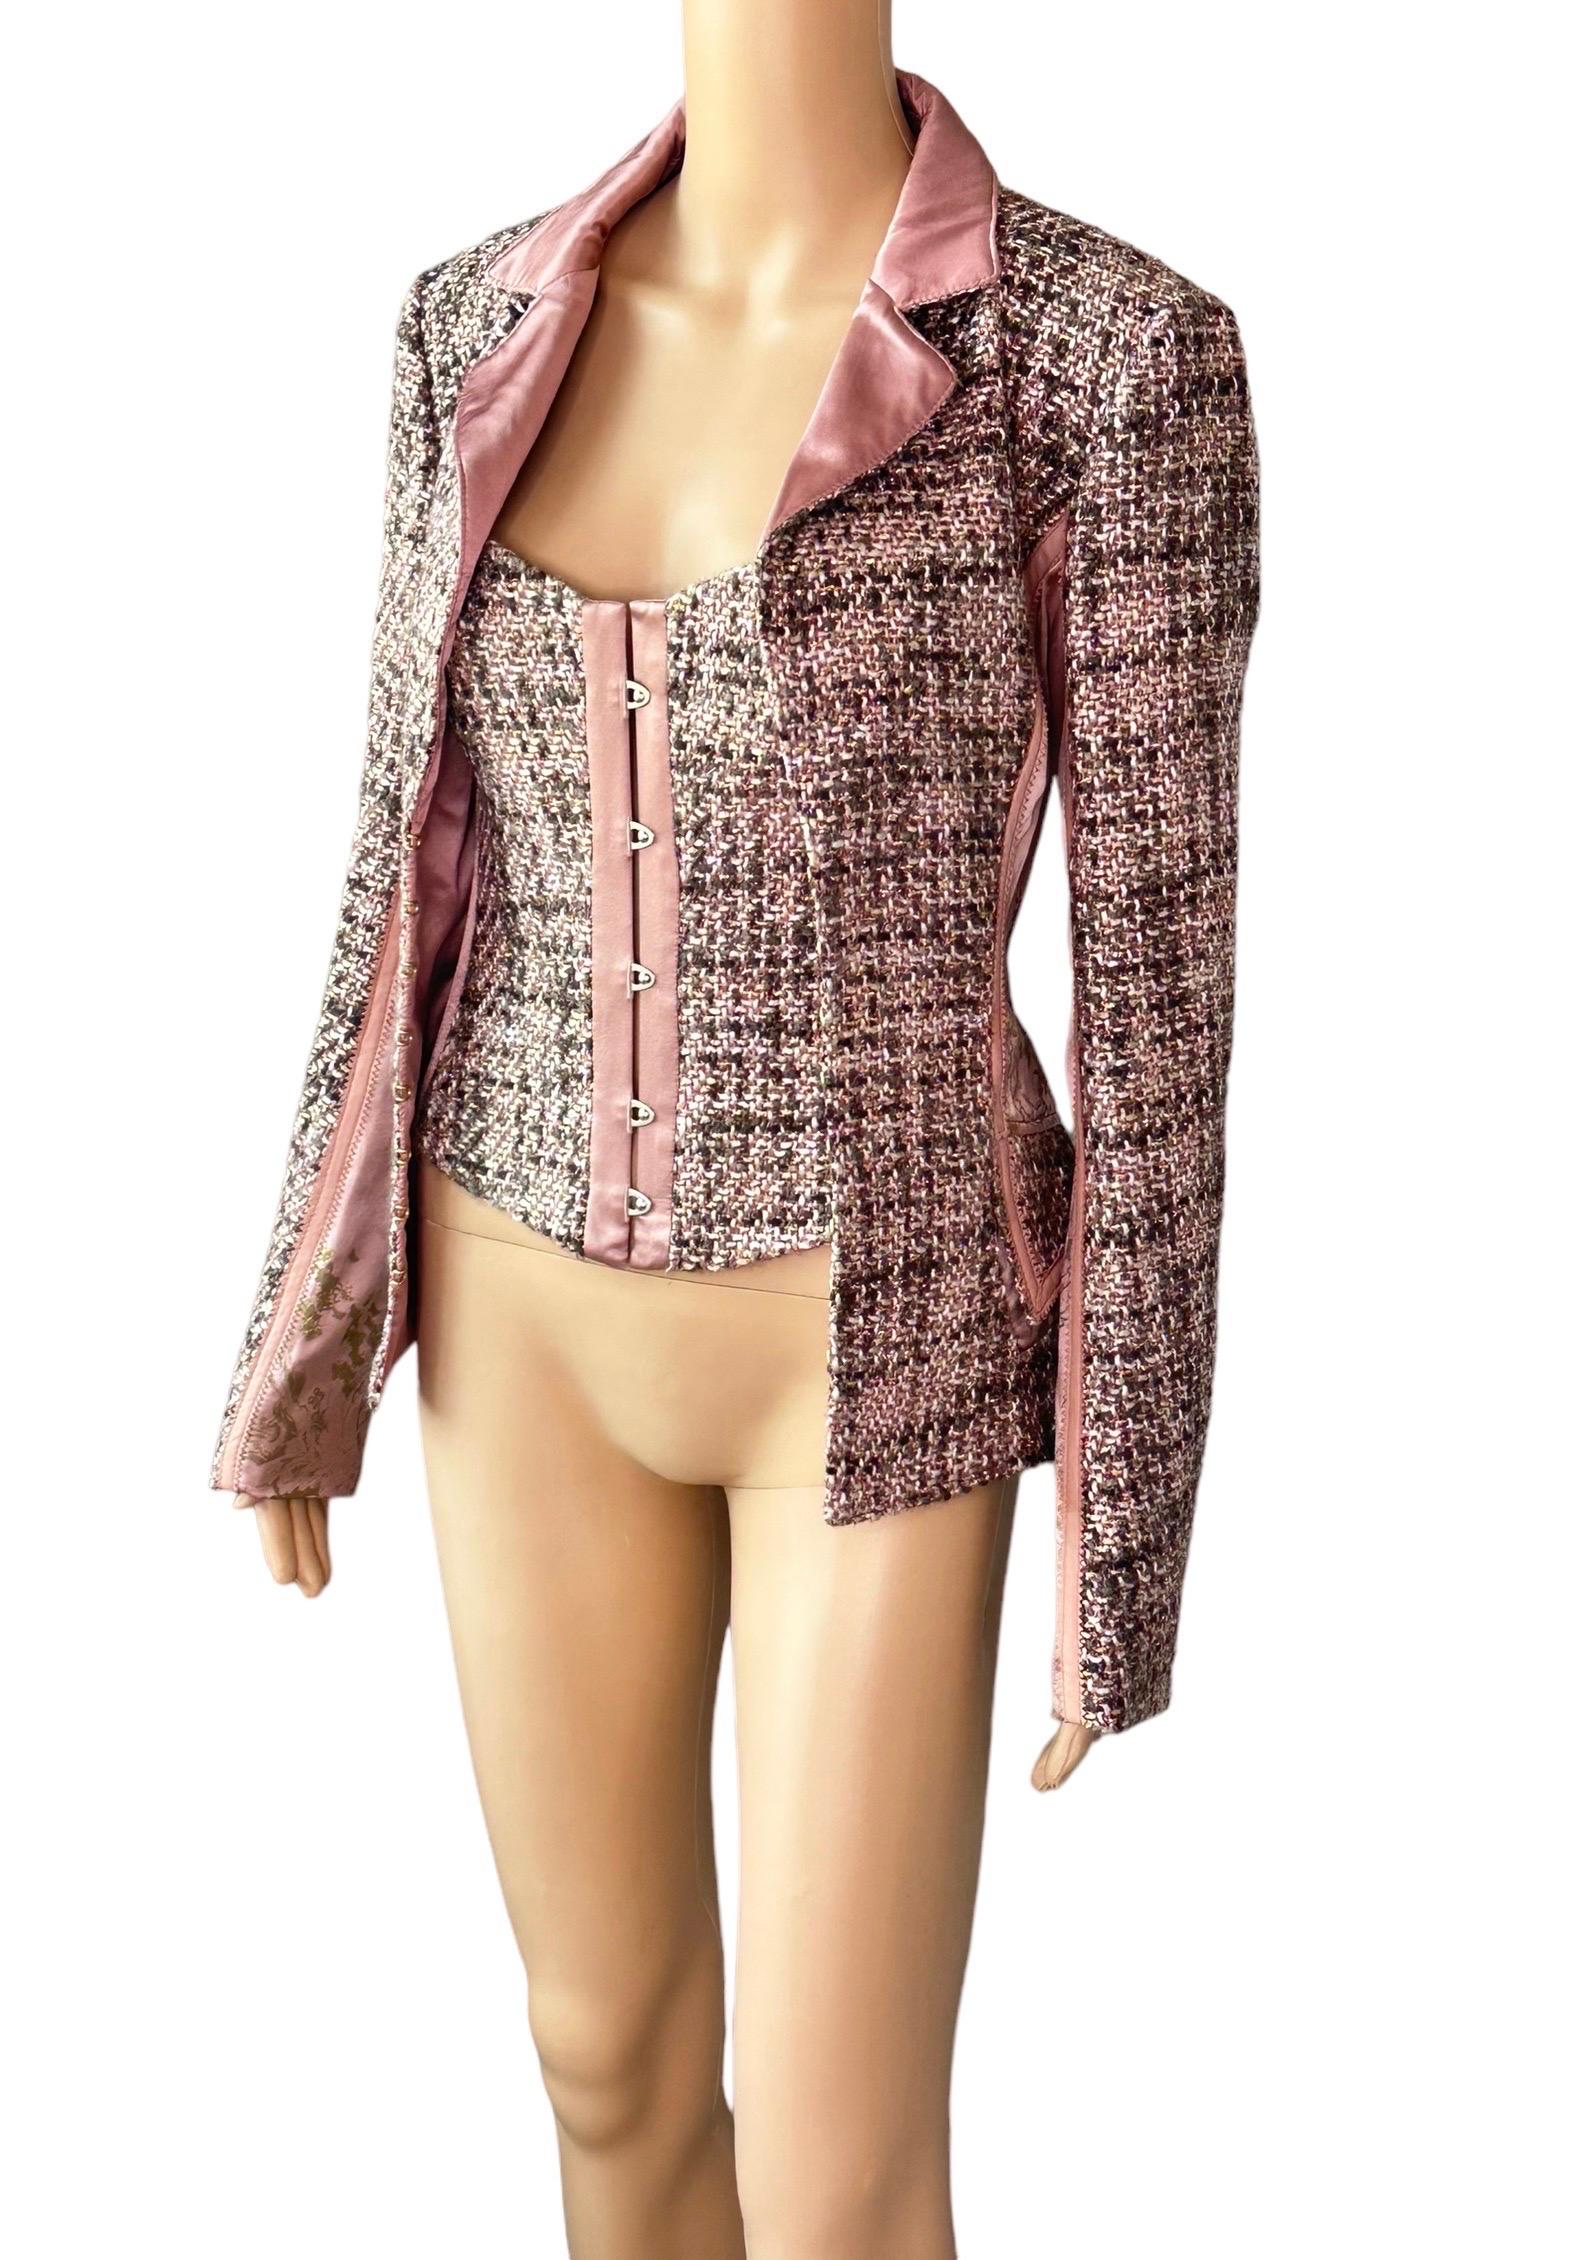 Roberto Cavalli c.2005 Bustier Tweed Lace Up Corset Top & Blazer 2 Piece Set  For Sale 6